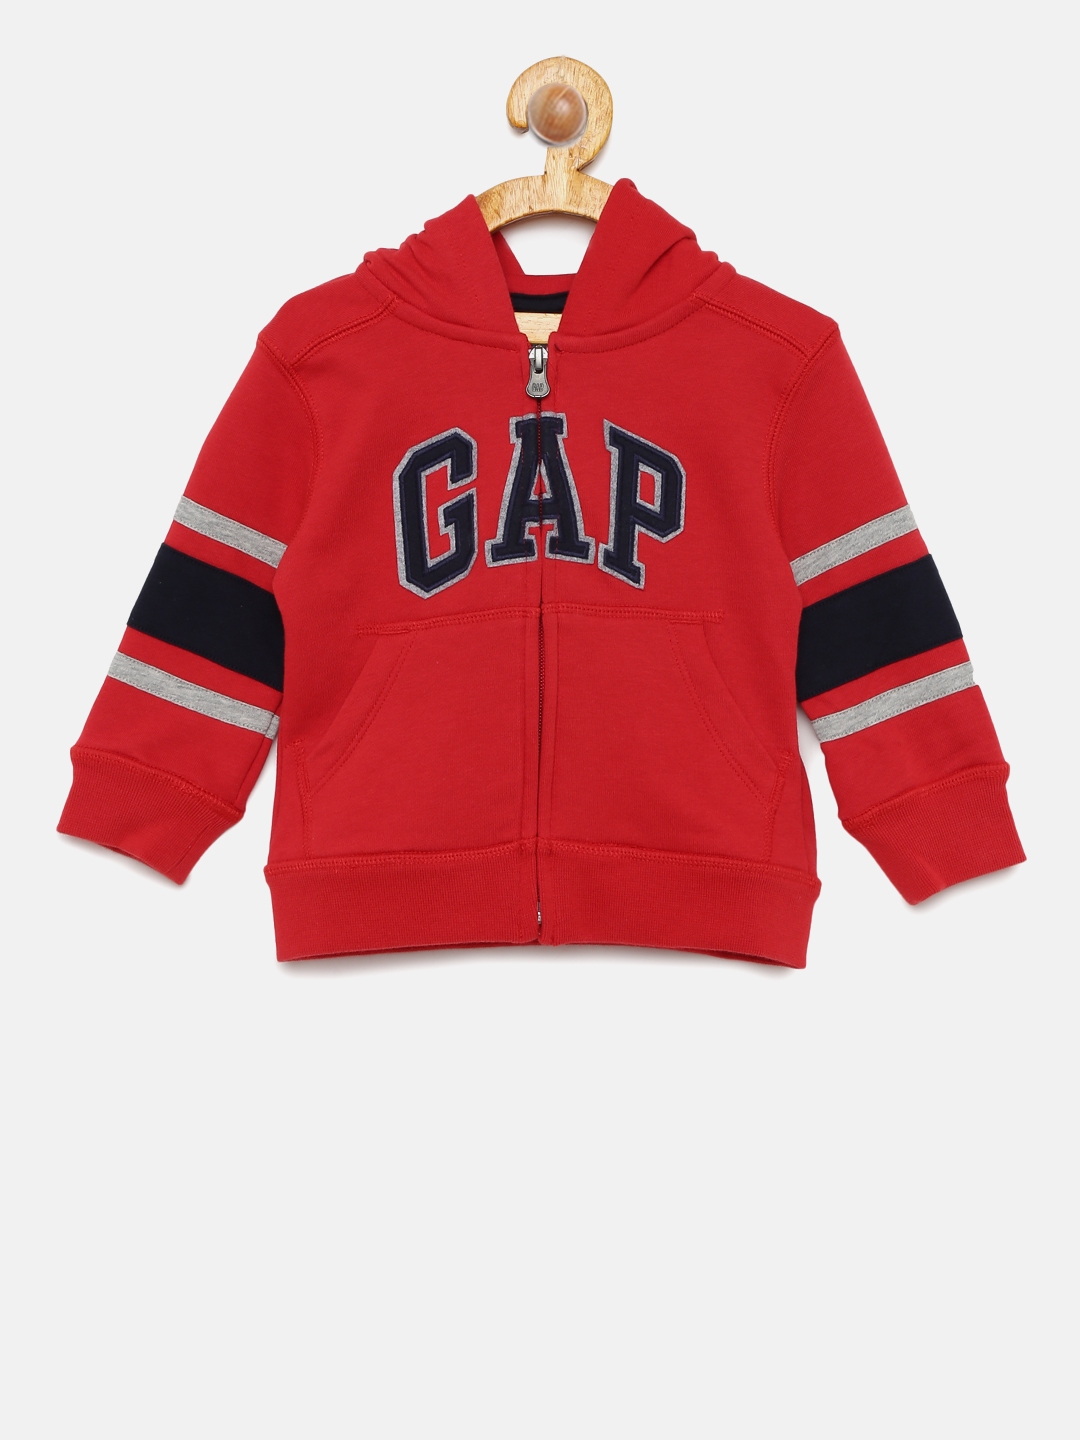 gap boys sweatshirts